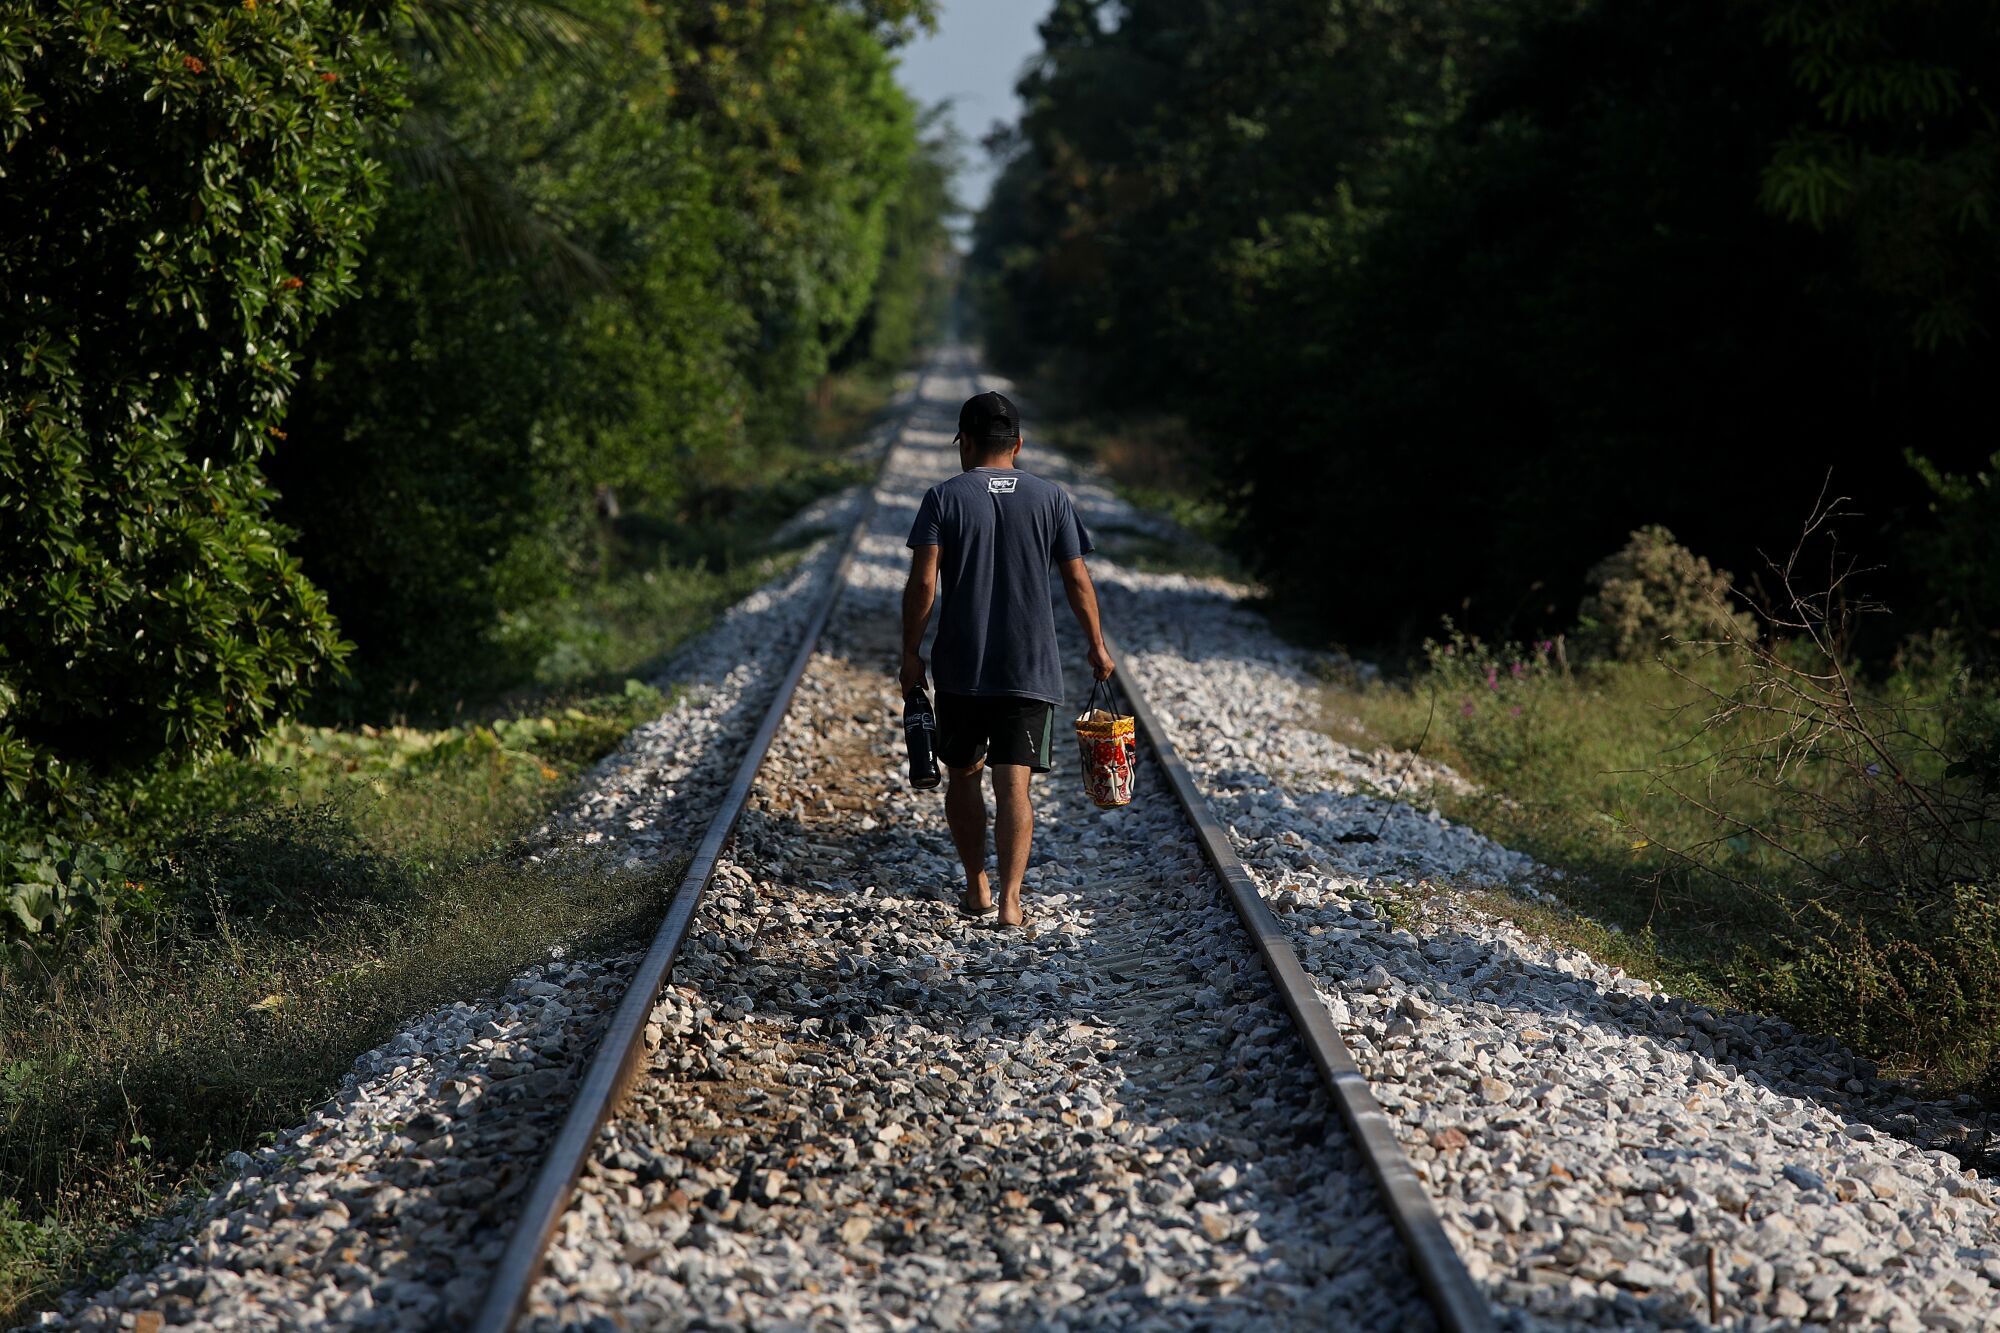 A man walks along the train tracks.